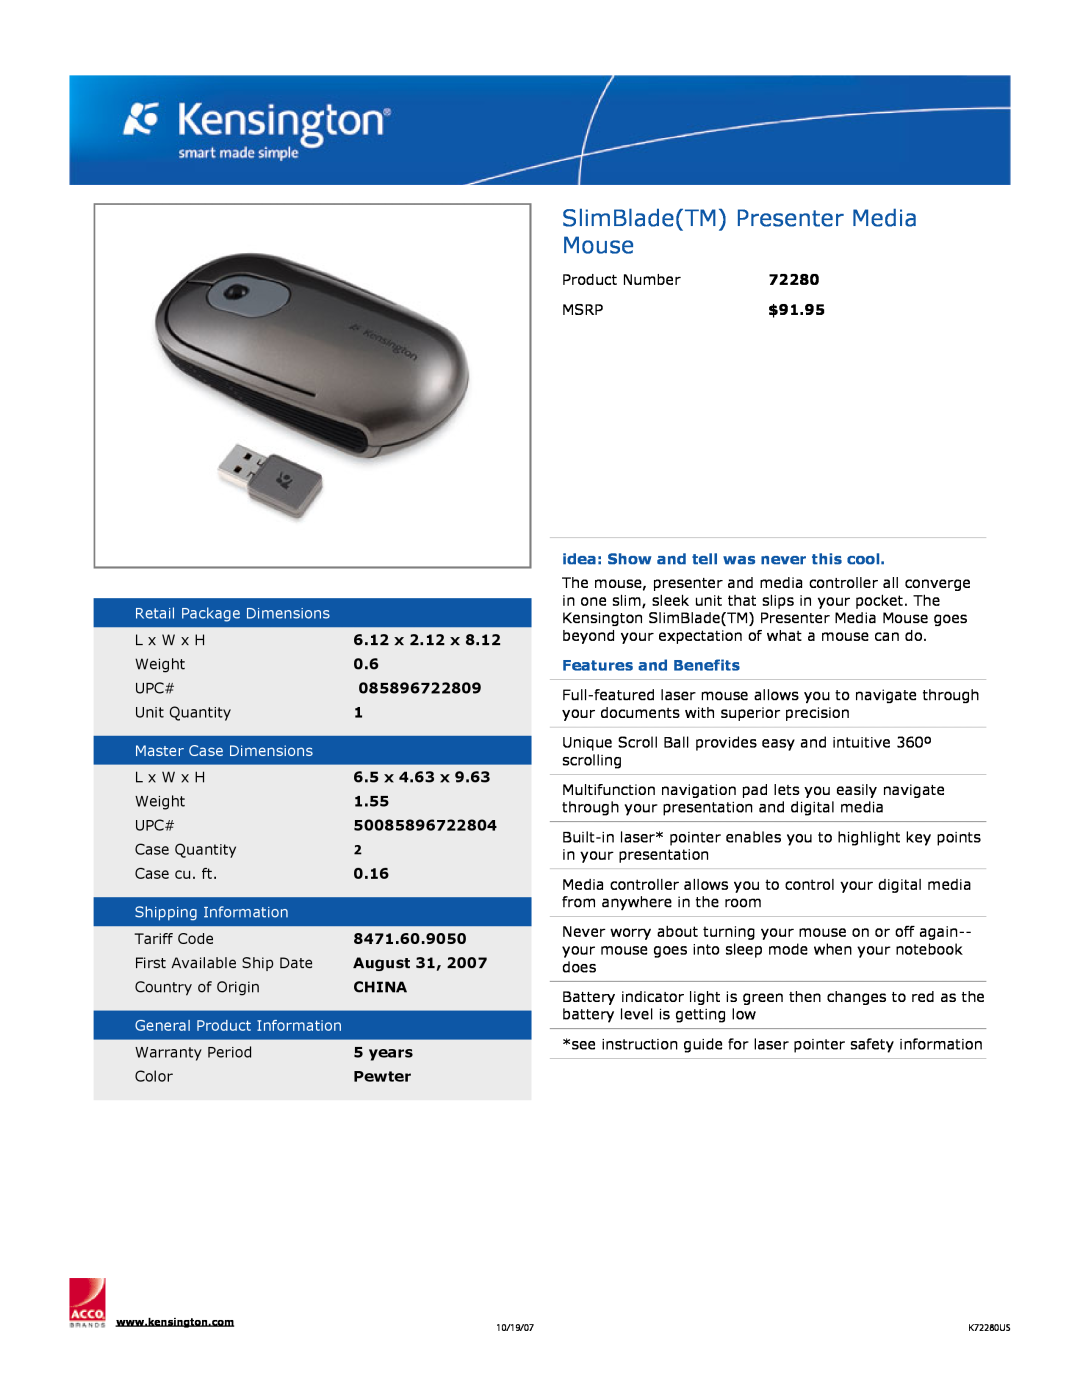 Kensington dimensions SlimBladeTM Presenter Media Mouse, Retail Package Dimensions, 6.12 x, 085896722809, 6.5 x, 0.16 